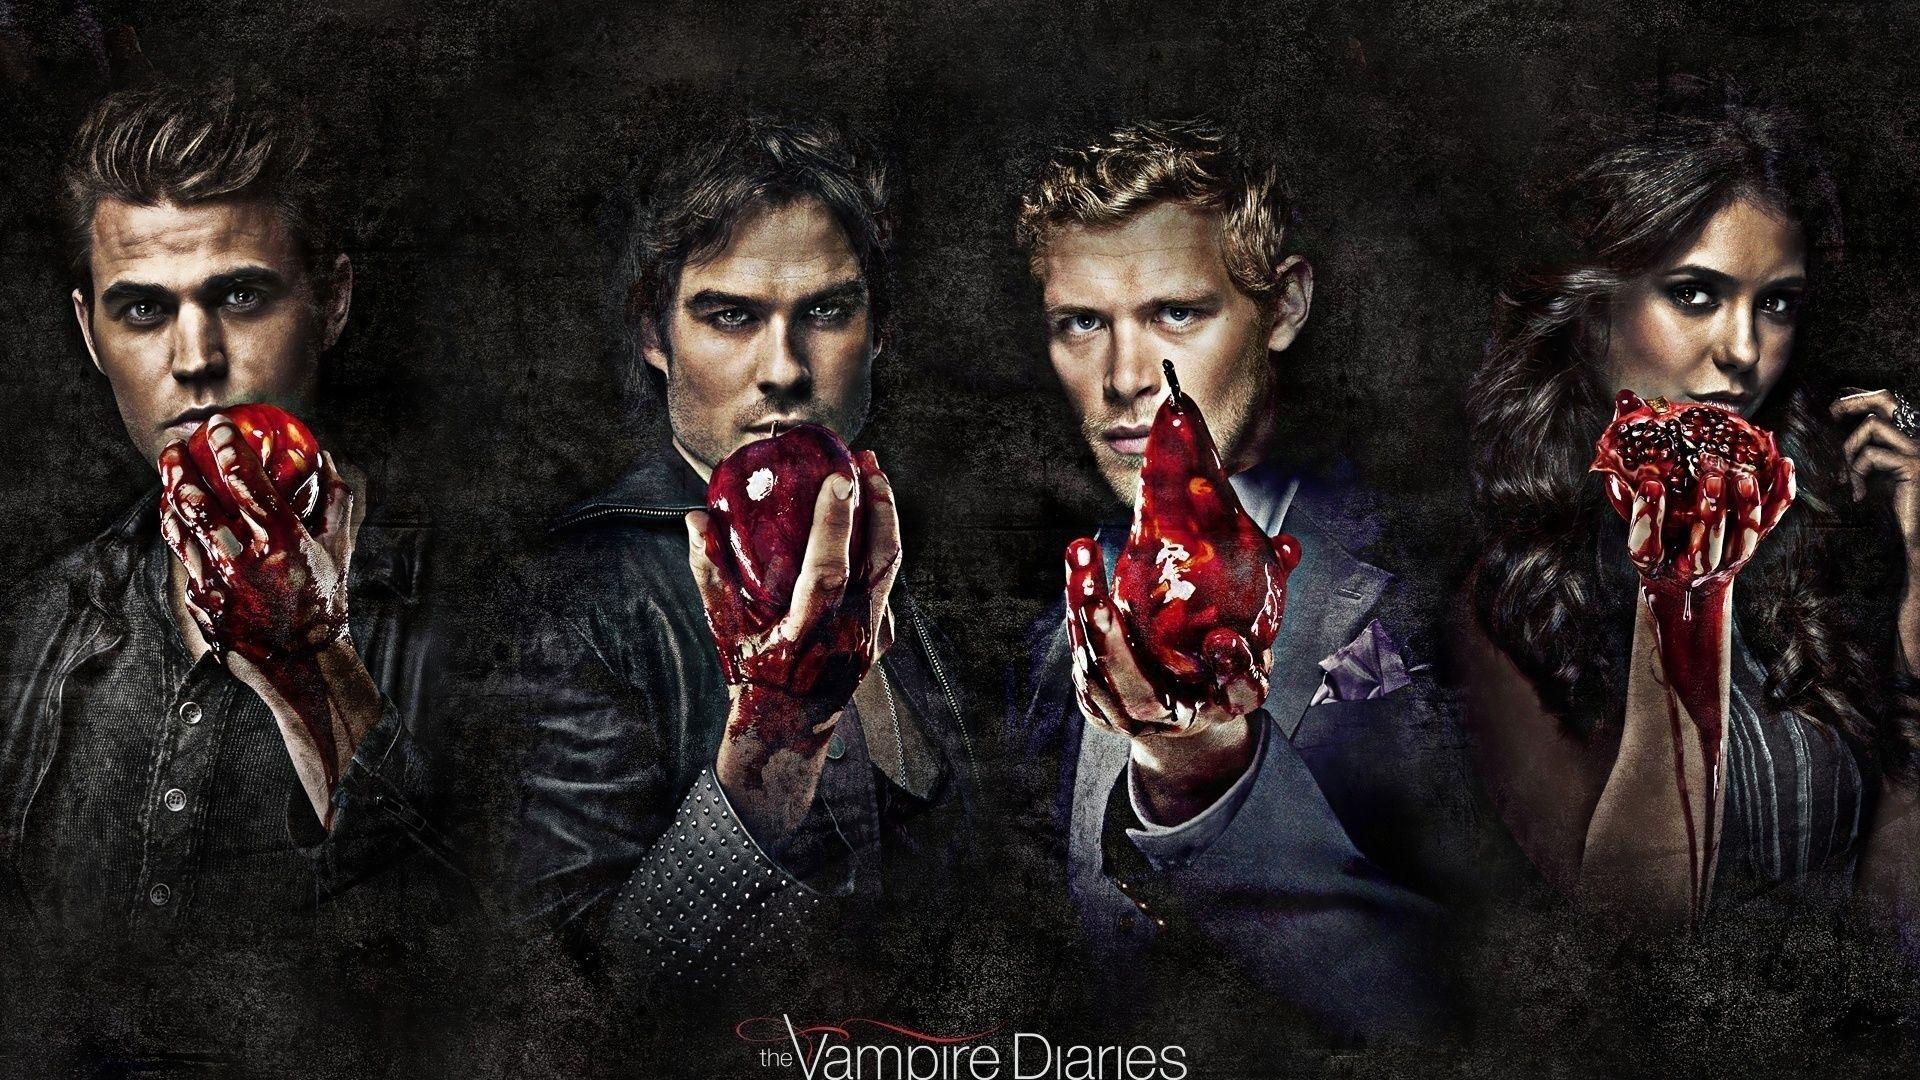 Vampire Diaries Wallpaper 12135 1920x1080 px